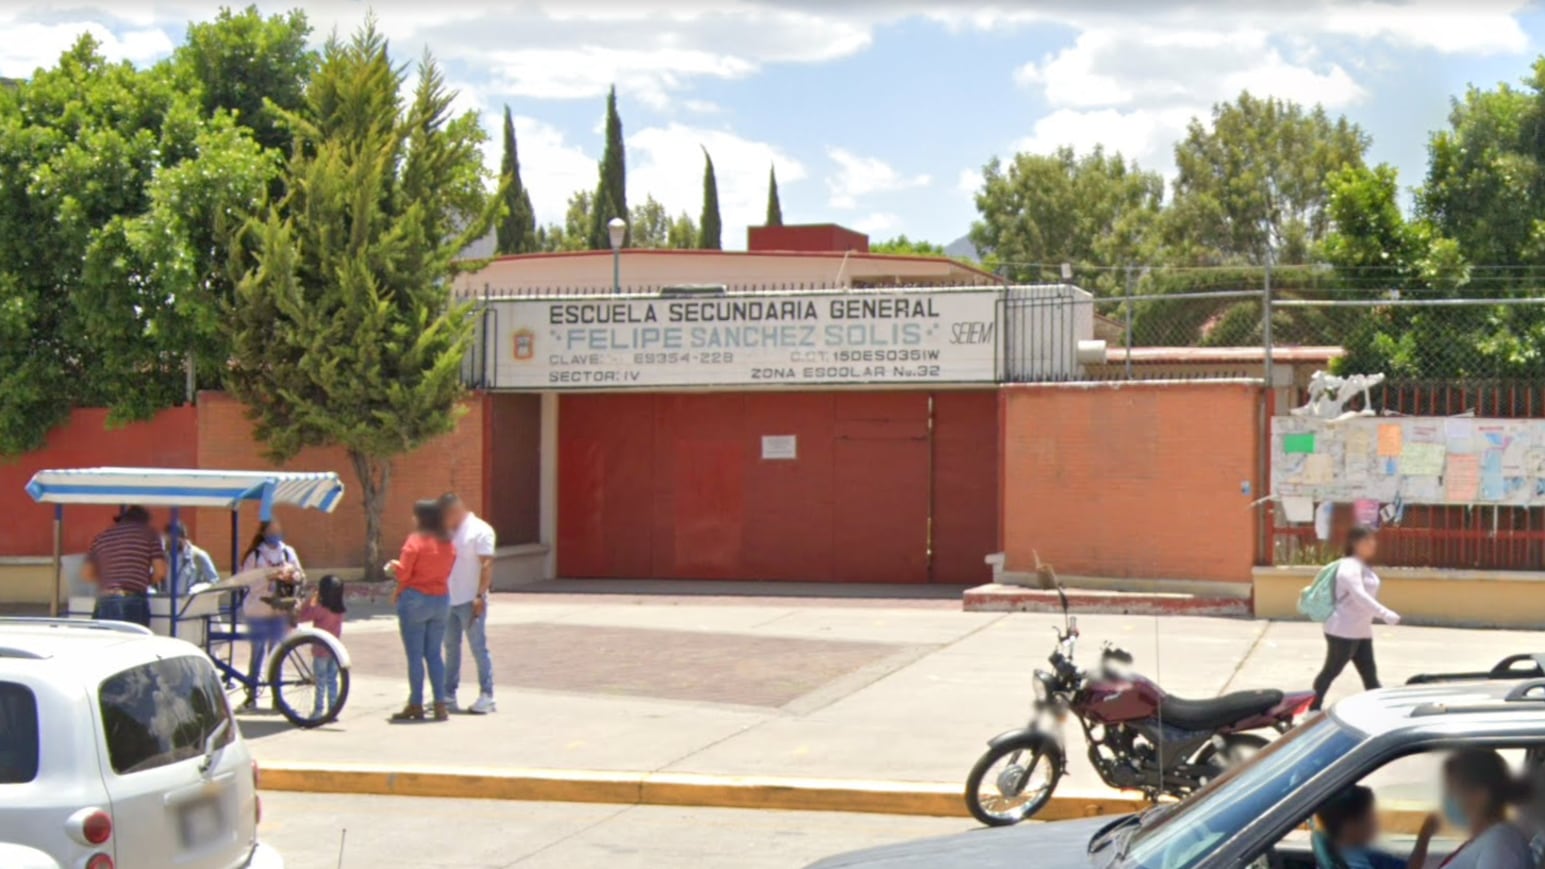 Escuela Secundaria General número 228 “Felipe Sánchez Solís”